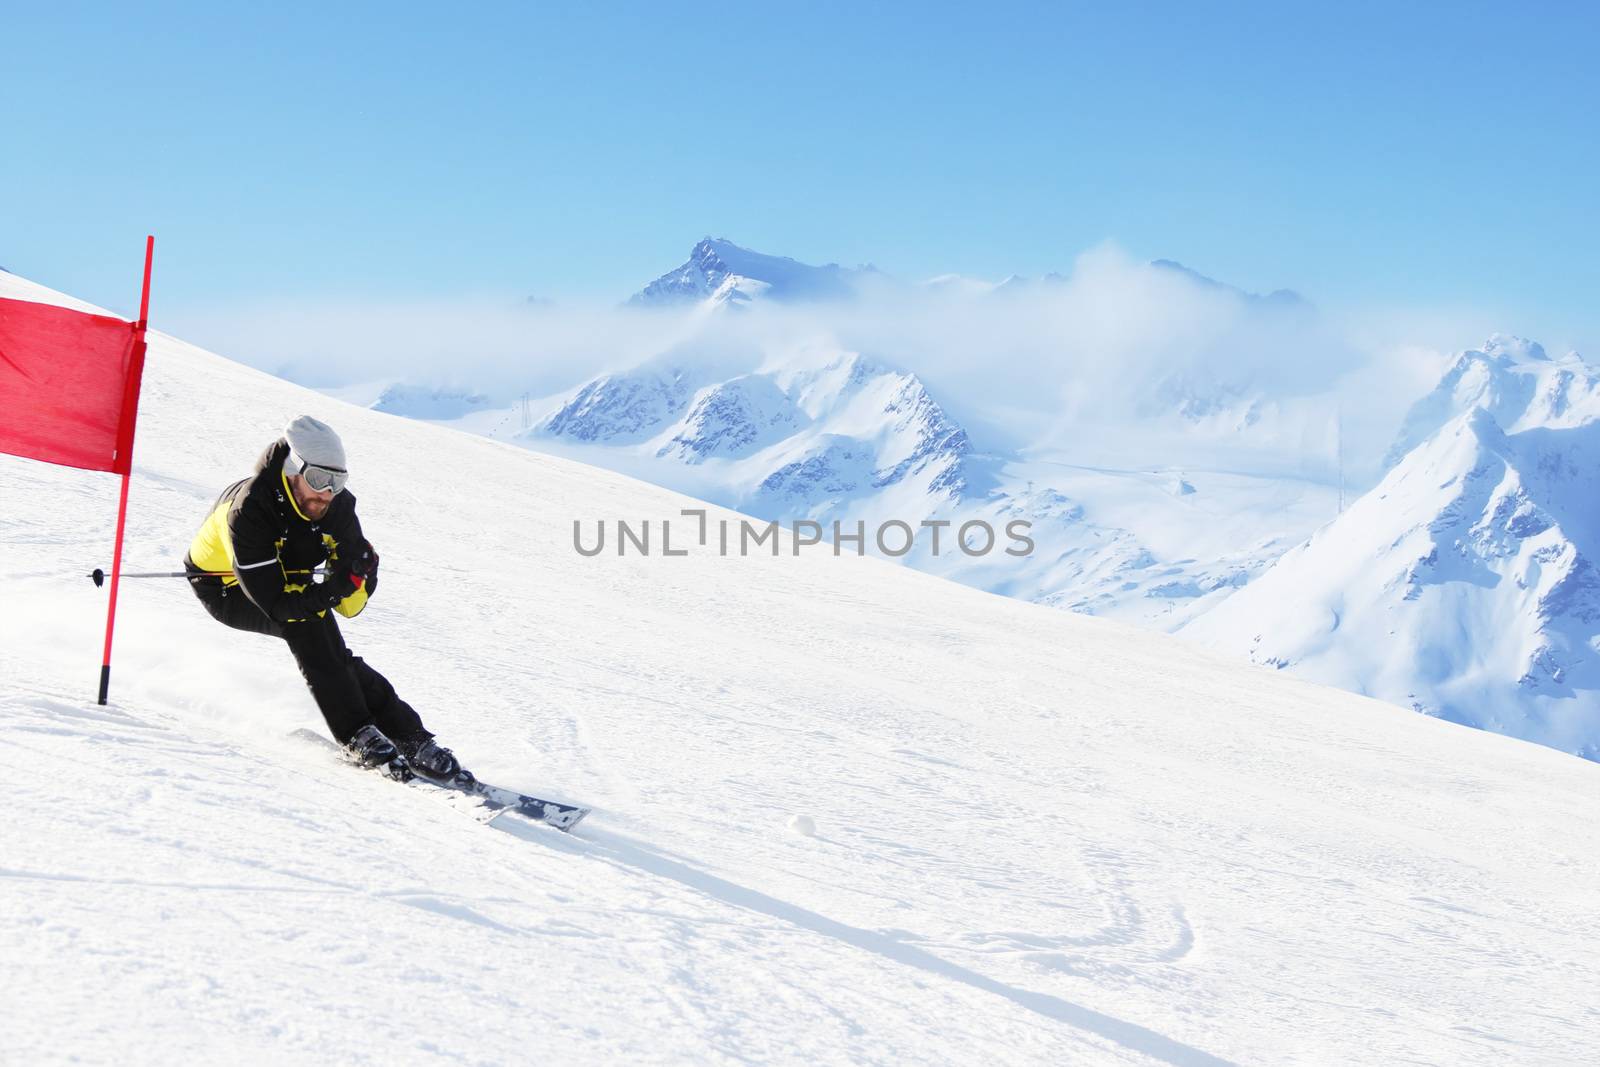 Giant Slalom ski racer by destillat